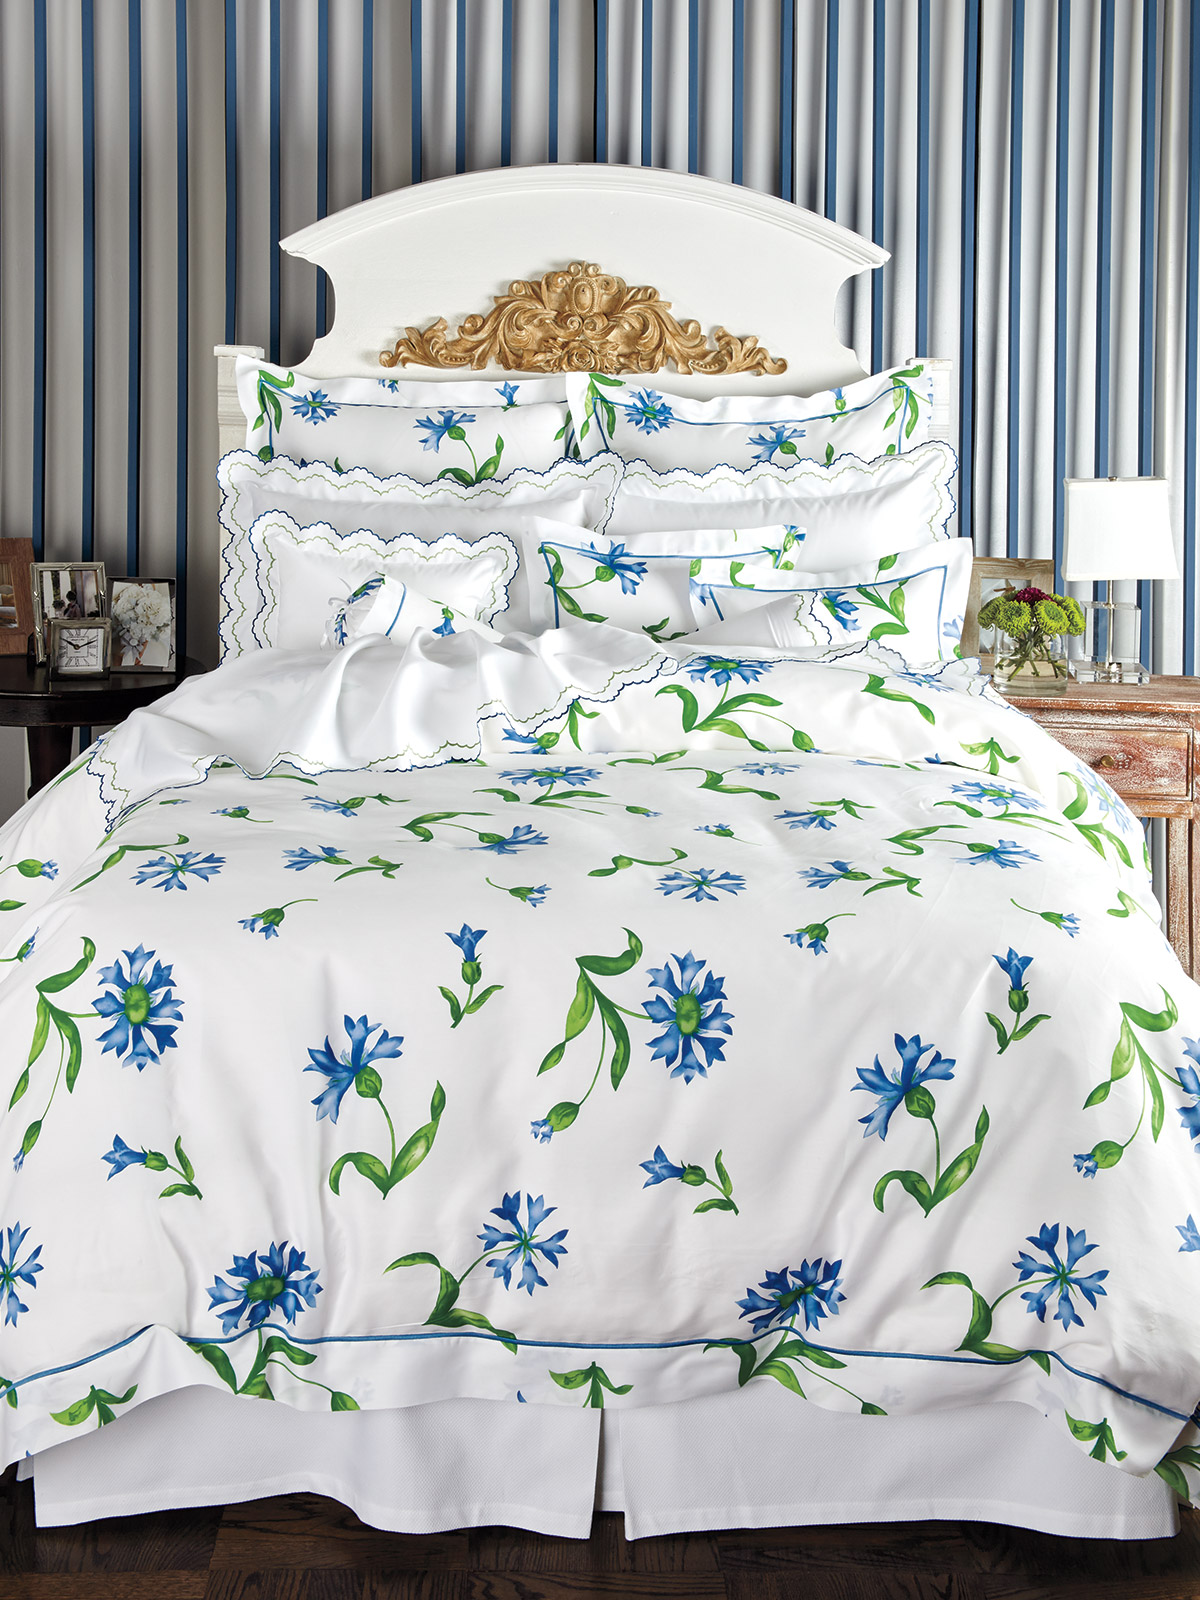 Italian Bed Linens Schweitzer Linen, Porthault Duvet Covers